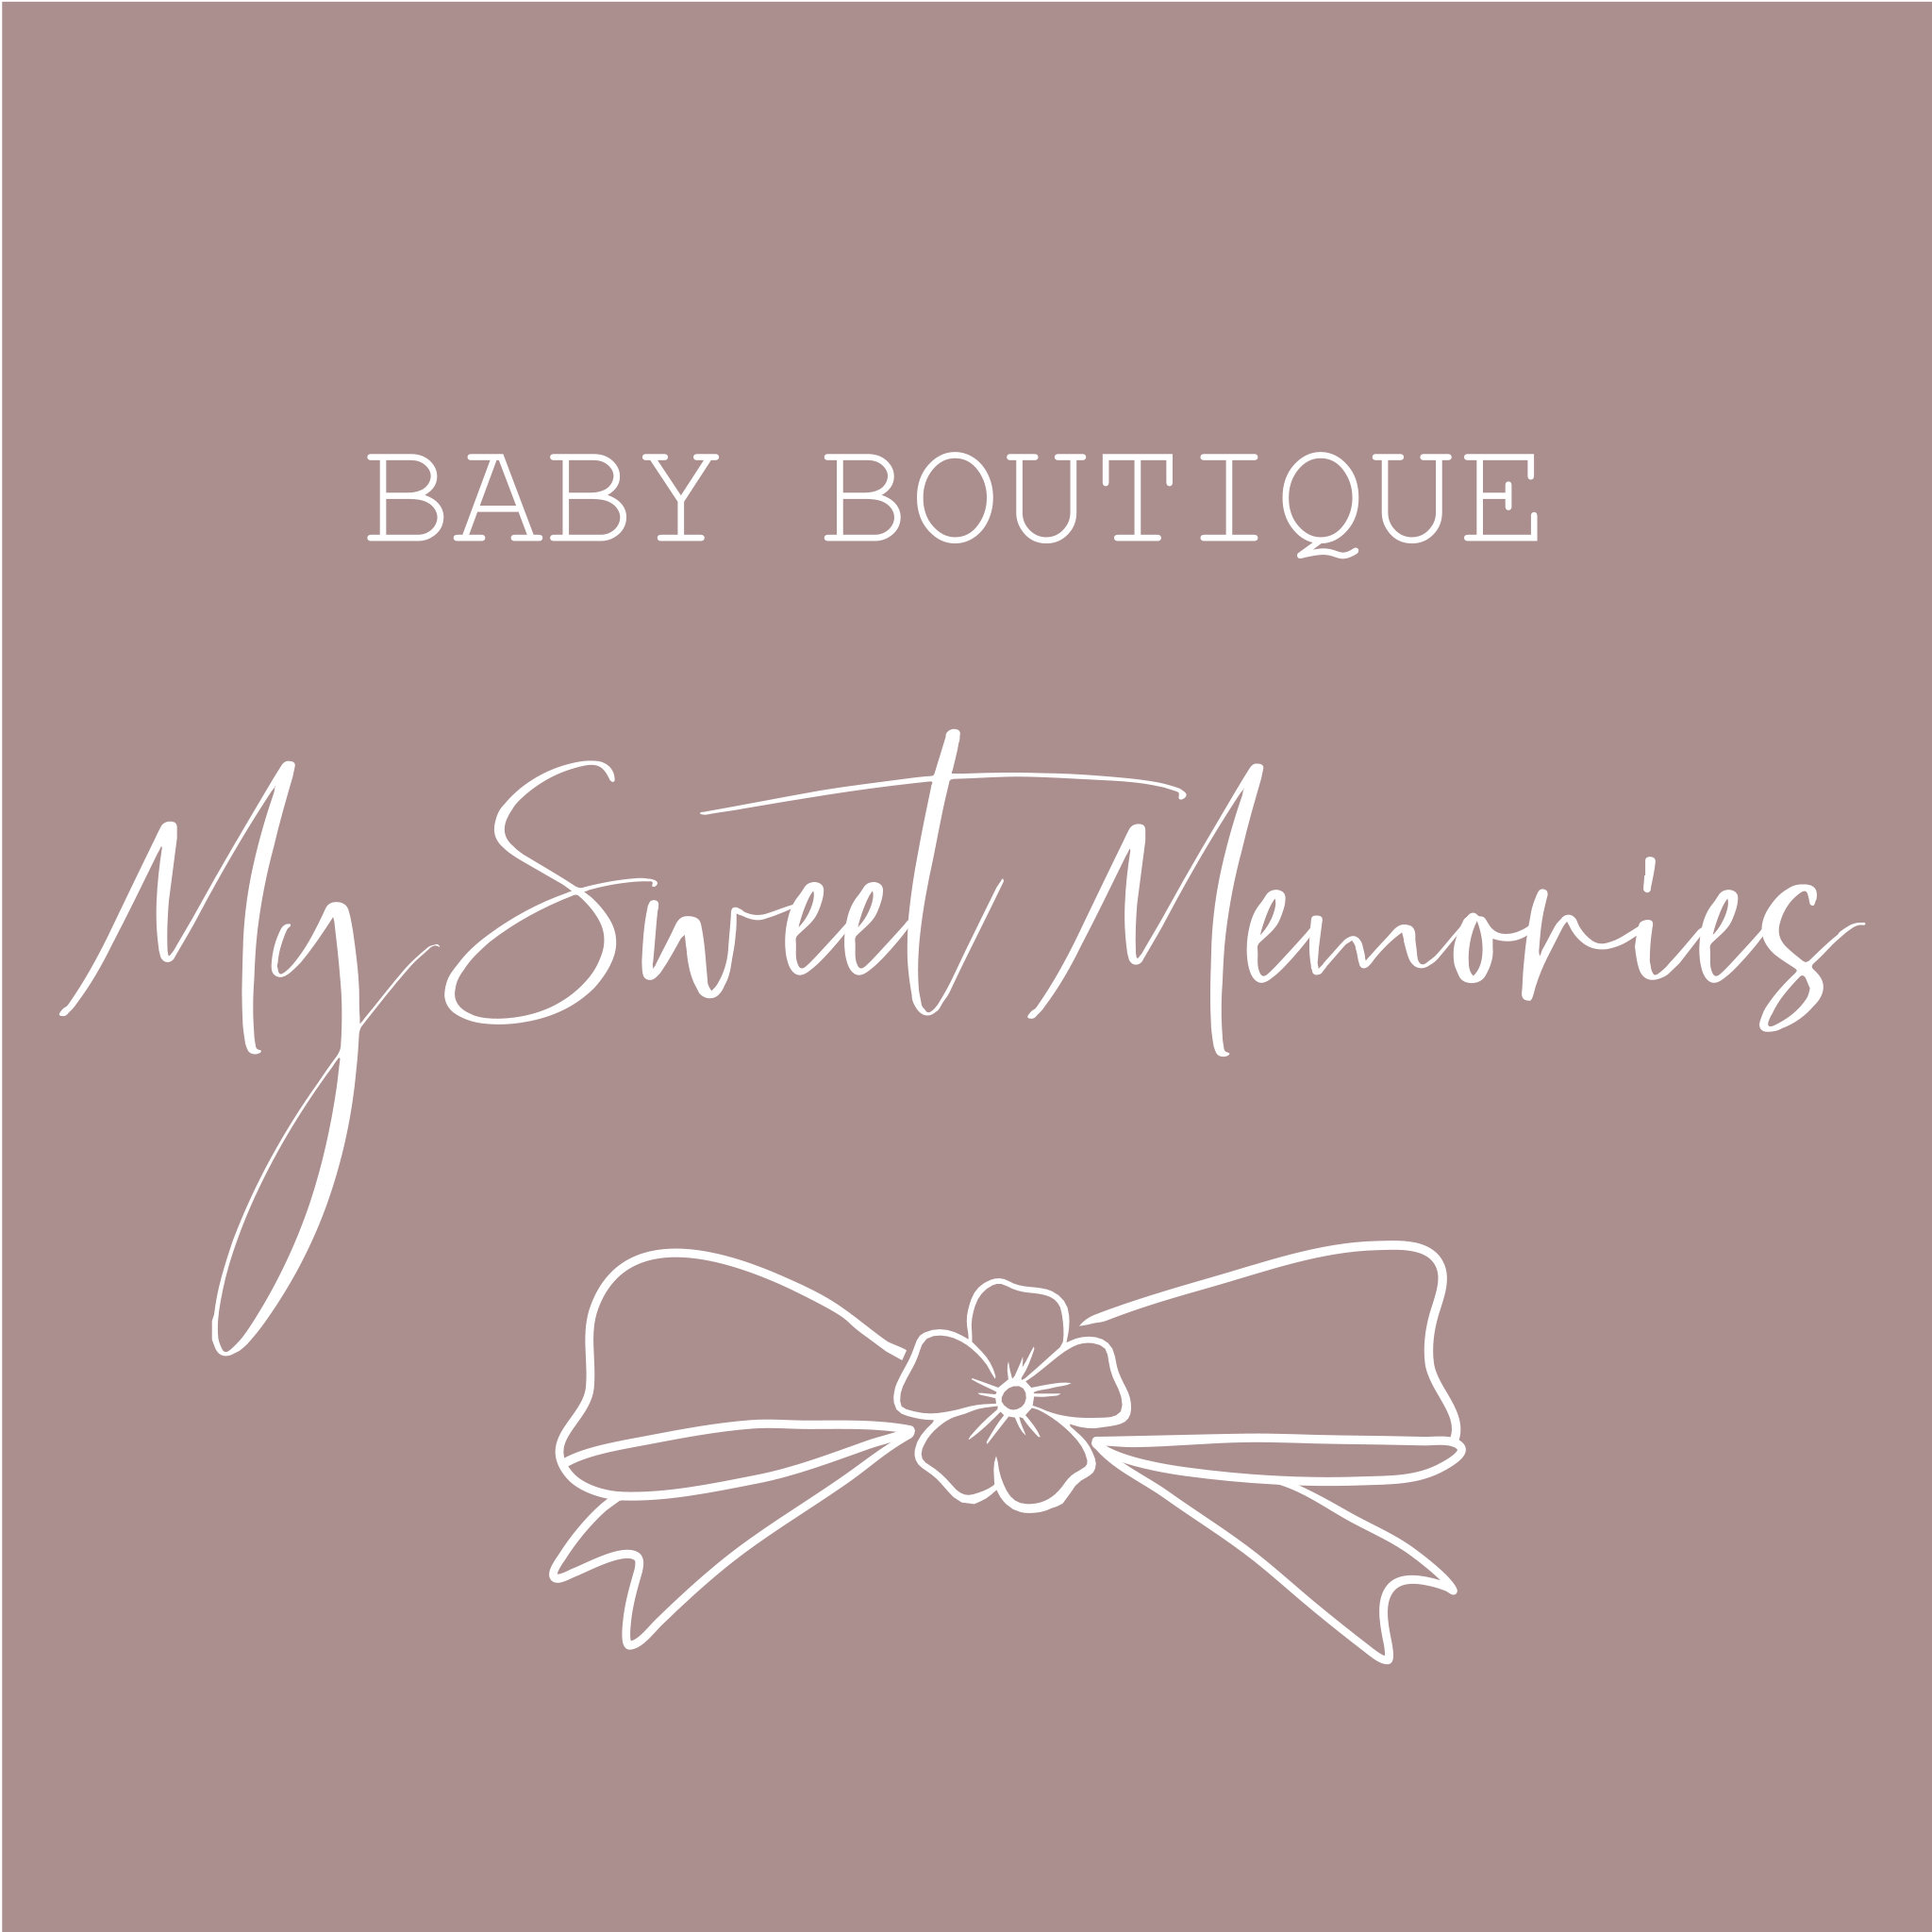 Baby Boutique My Sweet Memories